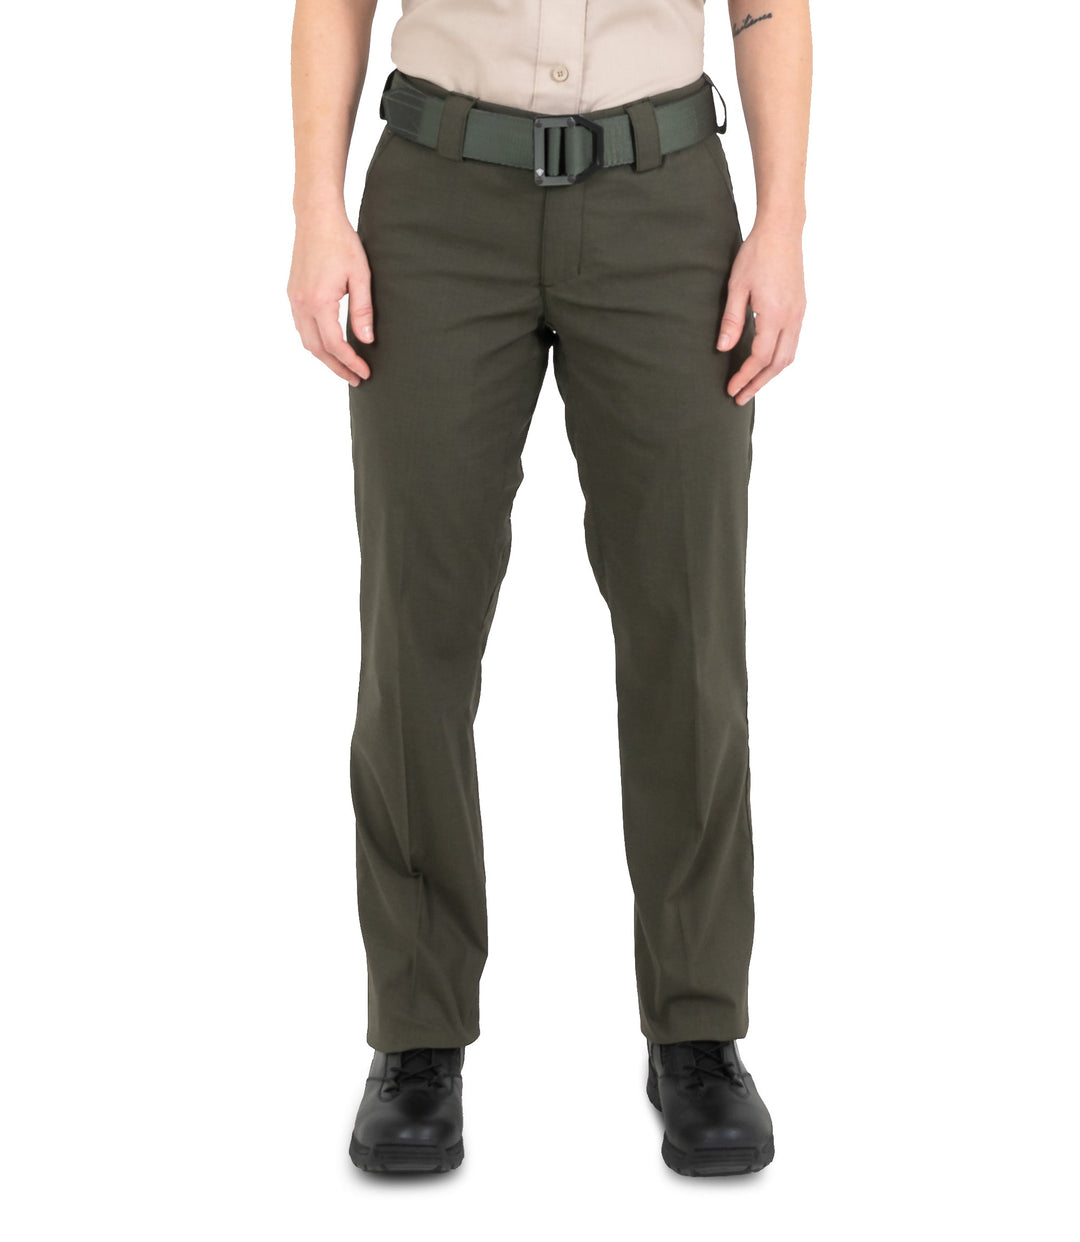 Front of Women's V2 Pro Duty 6 Pocket Pant in OD Green